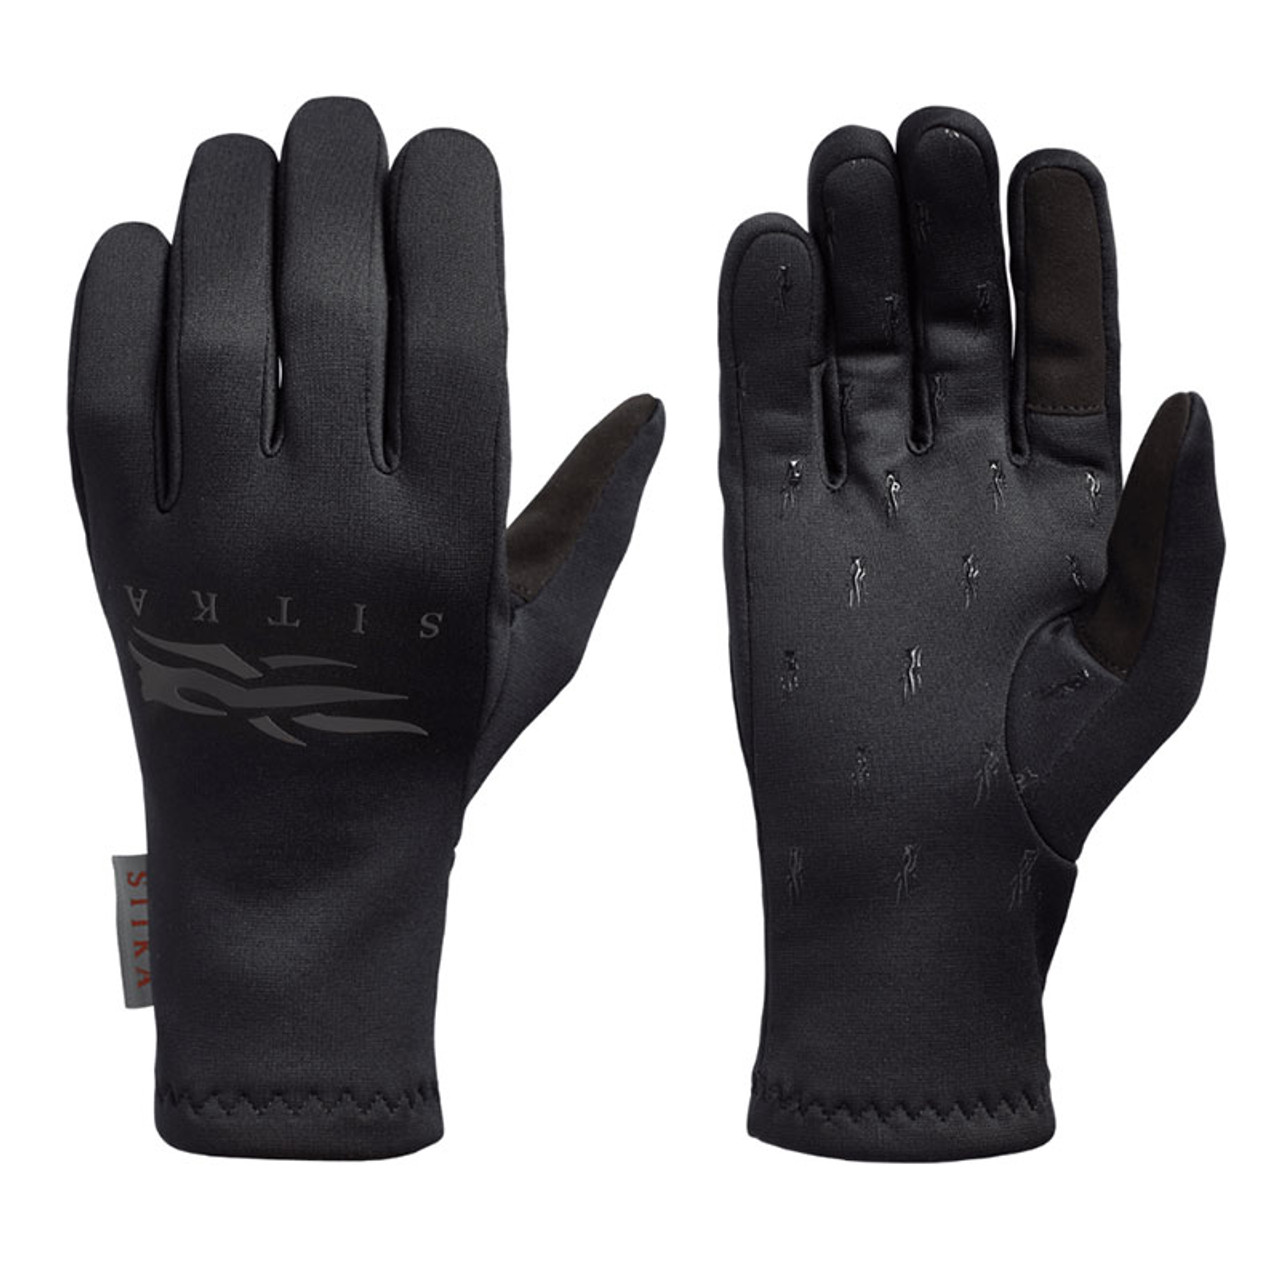 Traverse Black Gloves